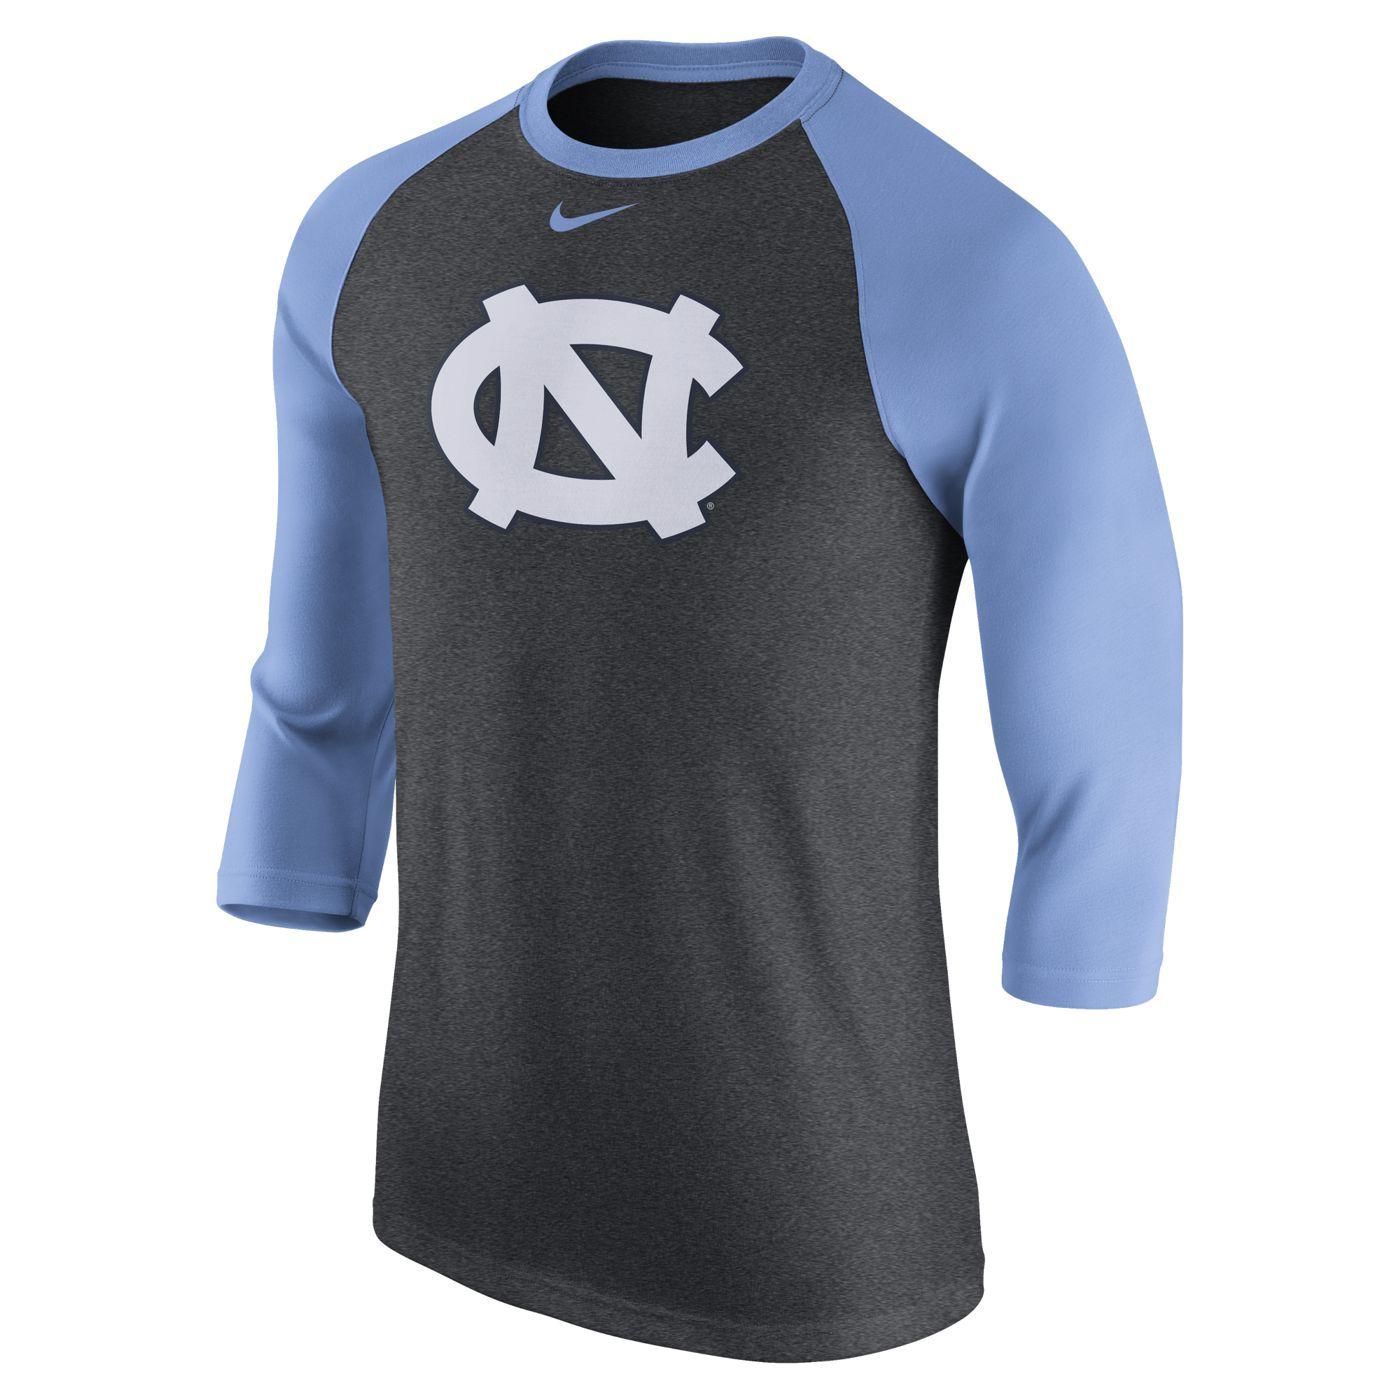 Carbon Nike Logo - Johnny T-shirt - North Carolina Tar Heels - Nike Logo Raglan 3/4 ...